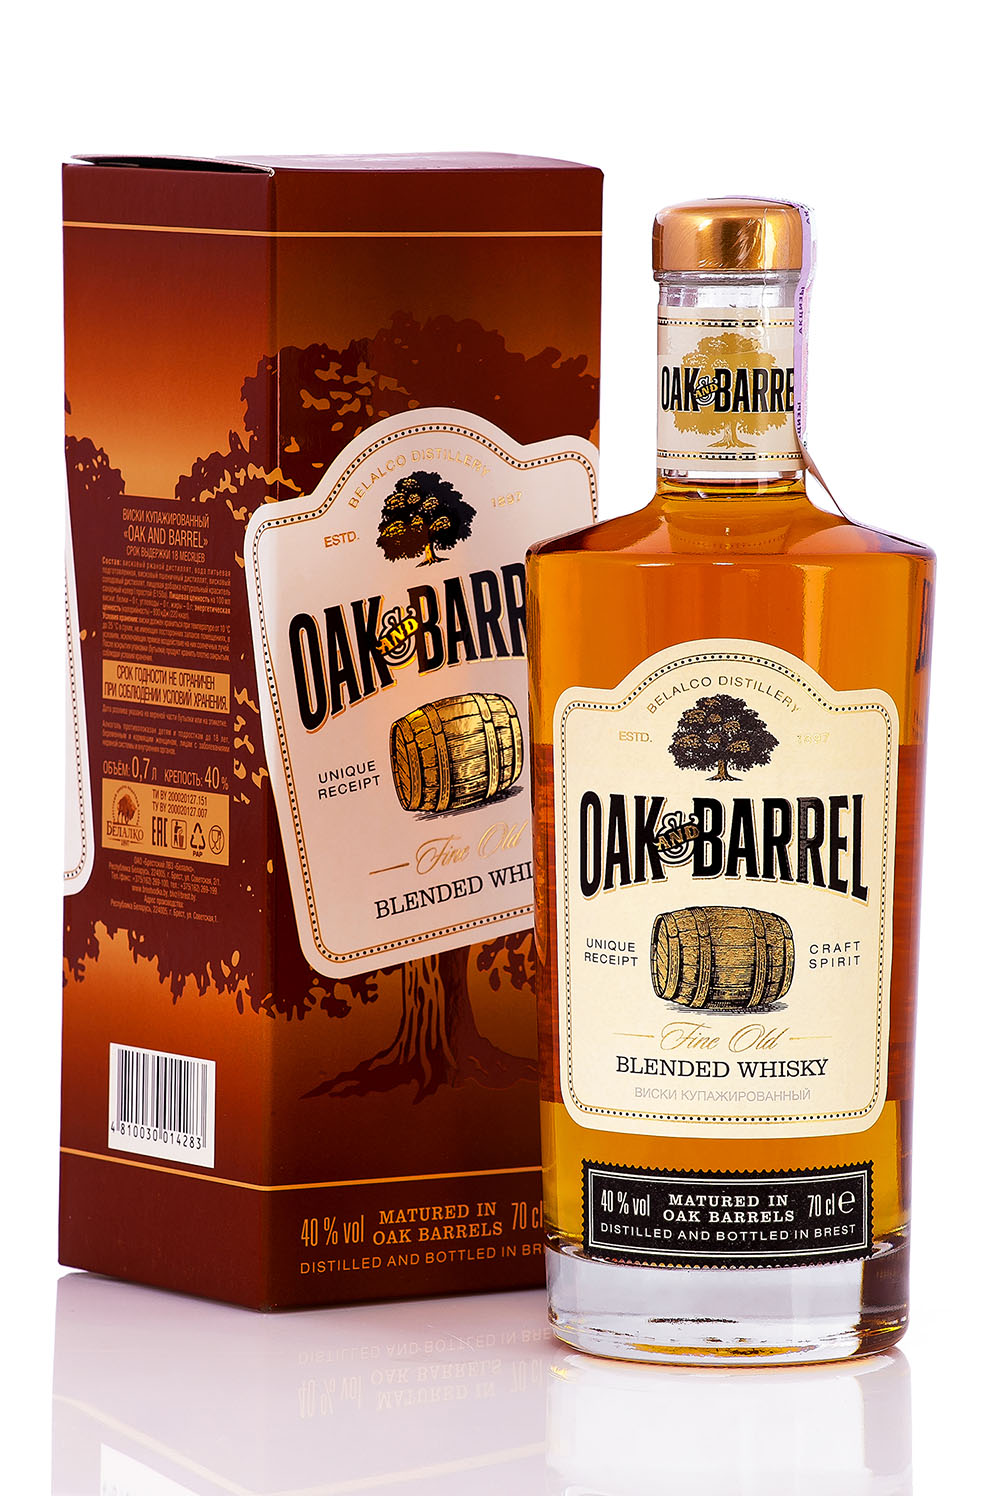 Встречайте: бочковой виски премиум класса «Oak and Barrel» 